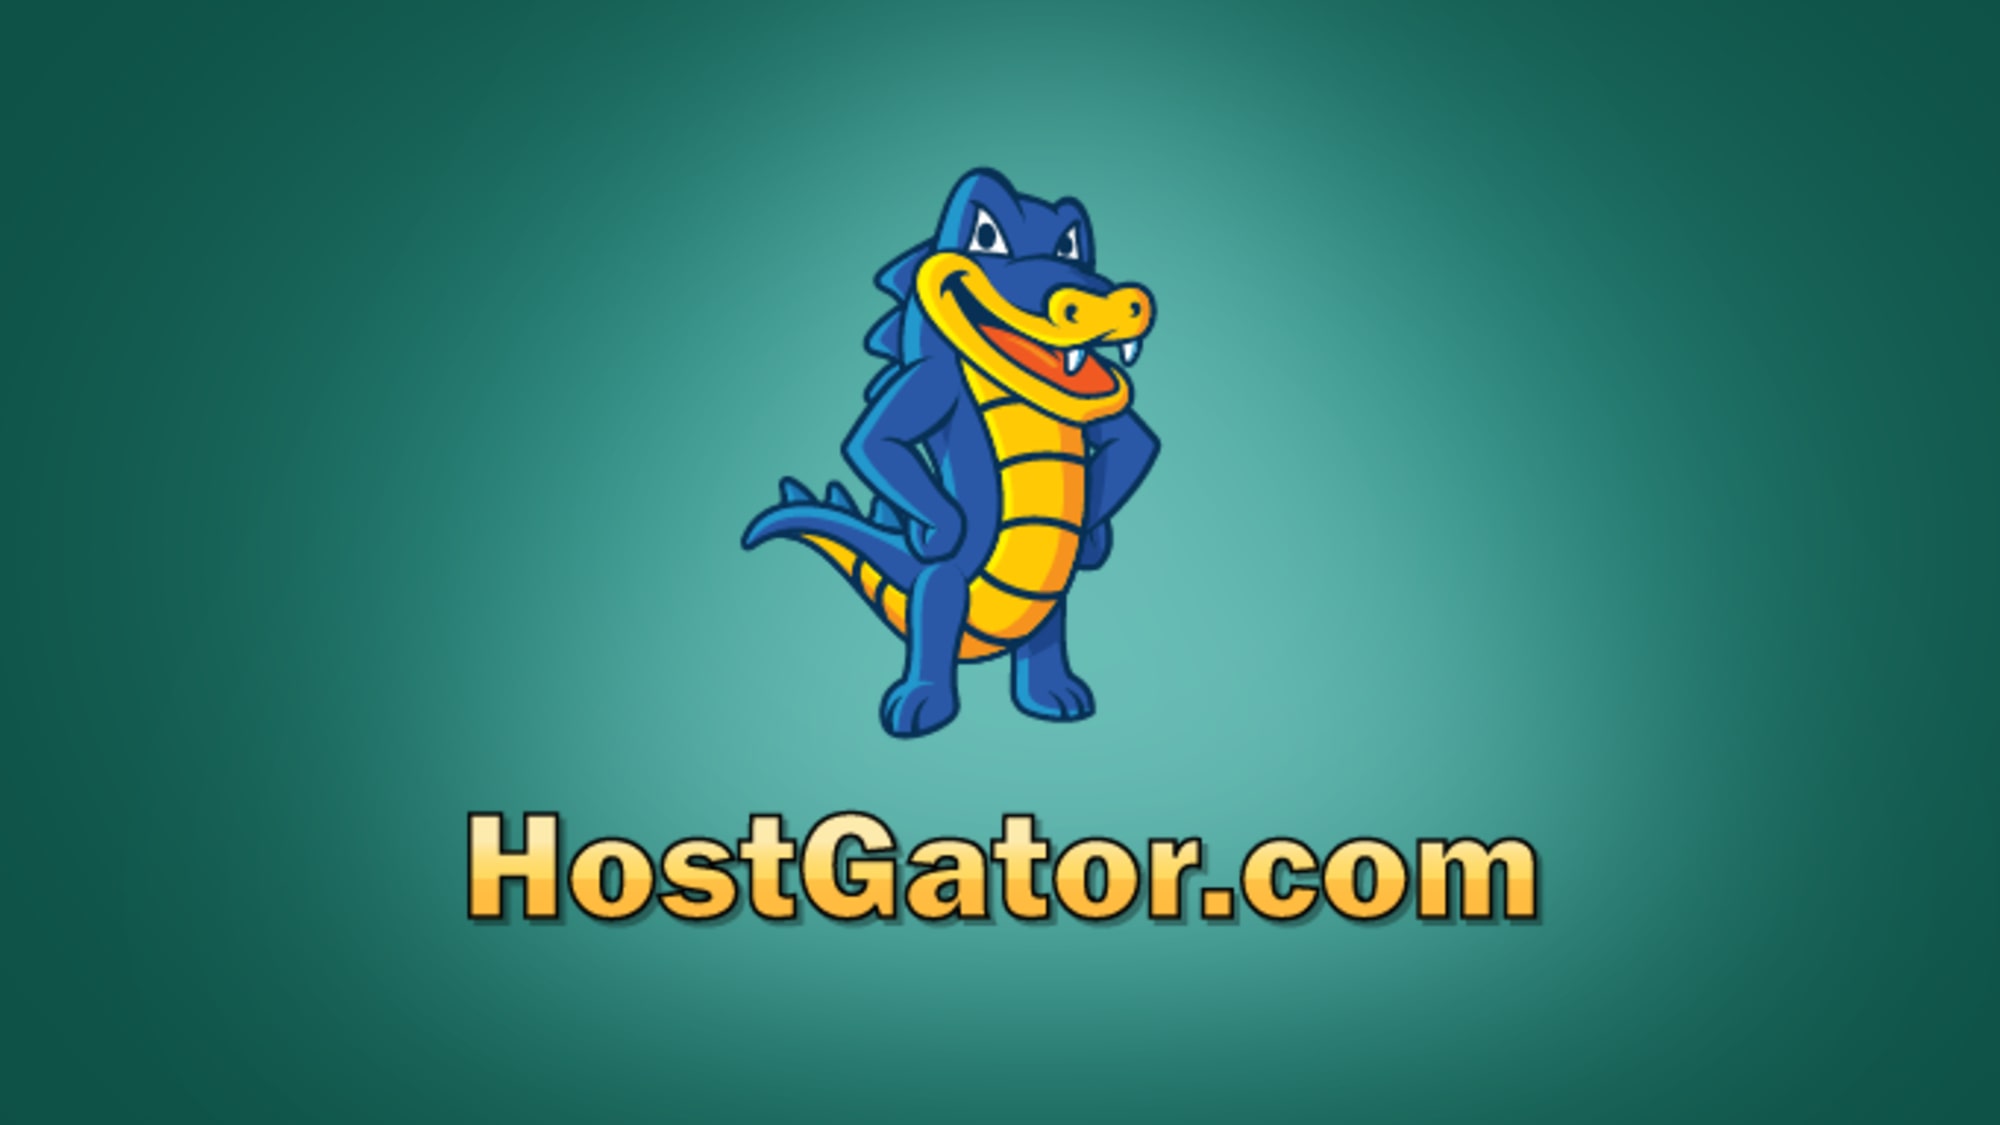 Yellow HostGator logo on a green background